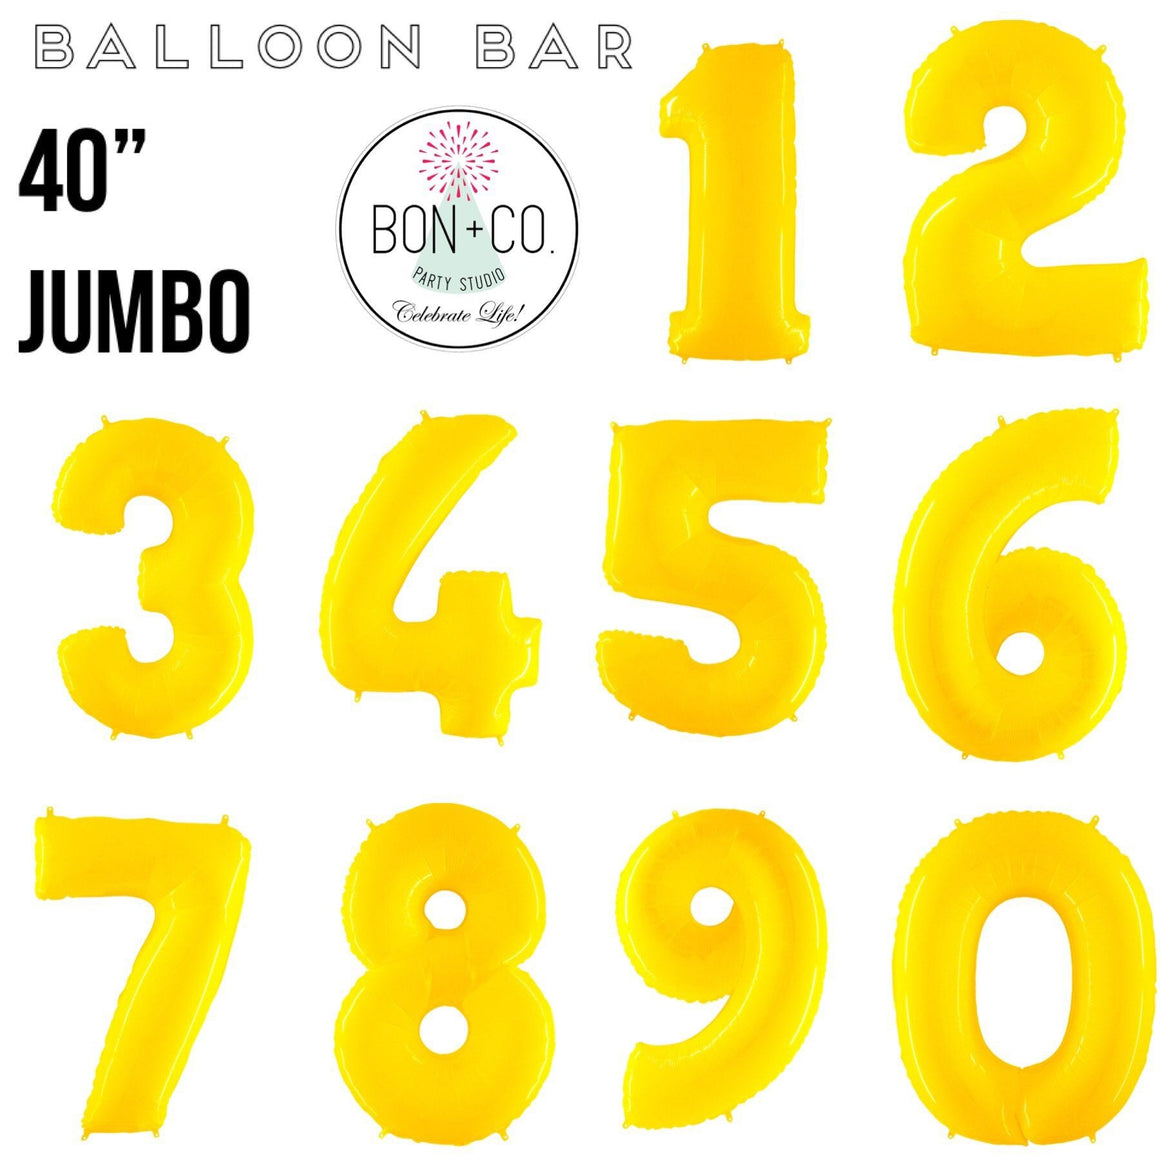 BALLOON BAR - 40" JUMBO NUMBER BRIGHT YELLOW, Balloons, bargain balloons - Bon + Co. Party Studio